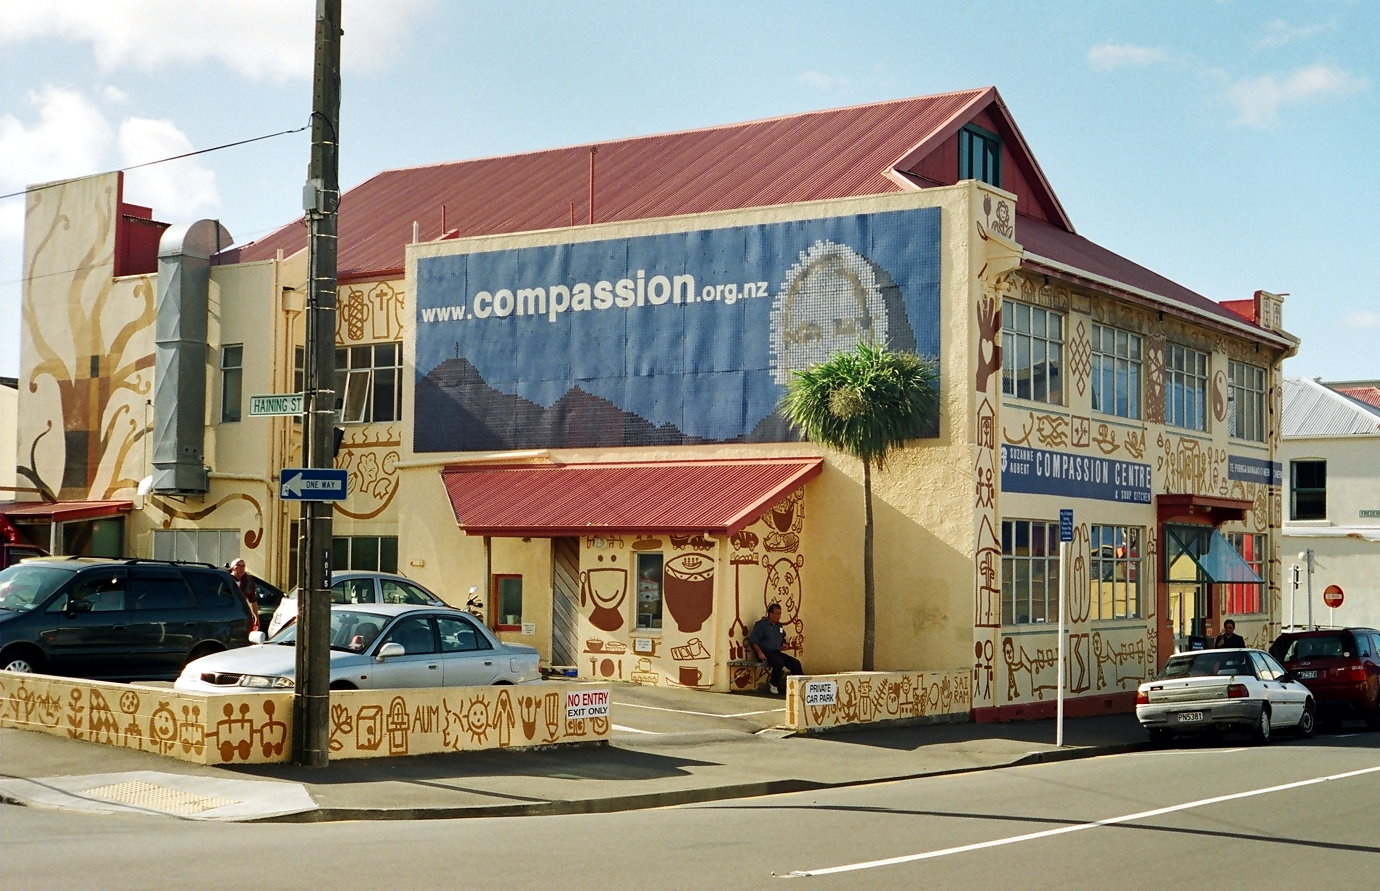 fotka / image Compassion Centre
, prvn dvojrole film prohnan Yashicou M - Wellington, NZ